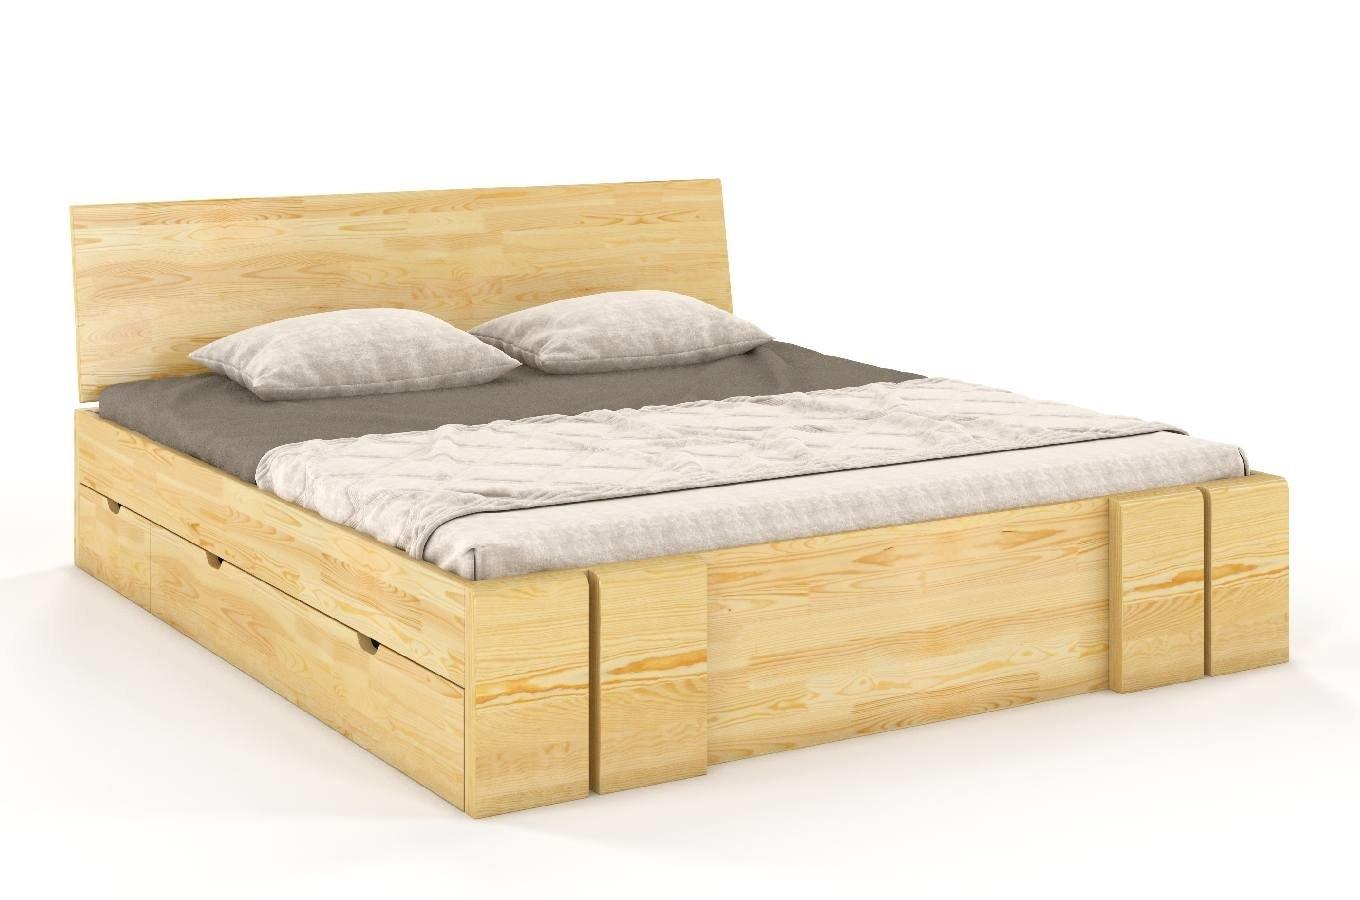 Łóżko drewniane sosnowe z szufladami Skandica VESTRE Maxi & DR / 140x200 cm, kolor naturalny